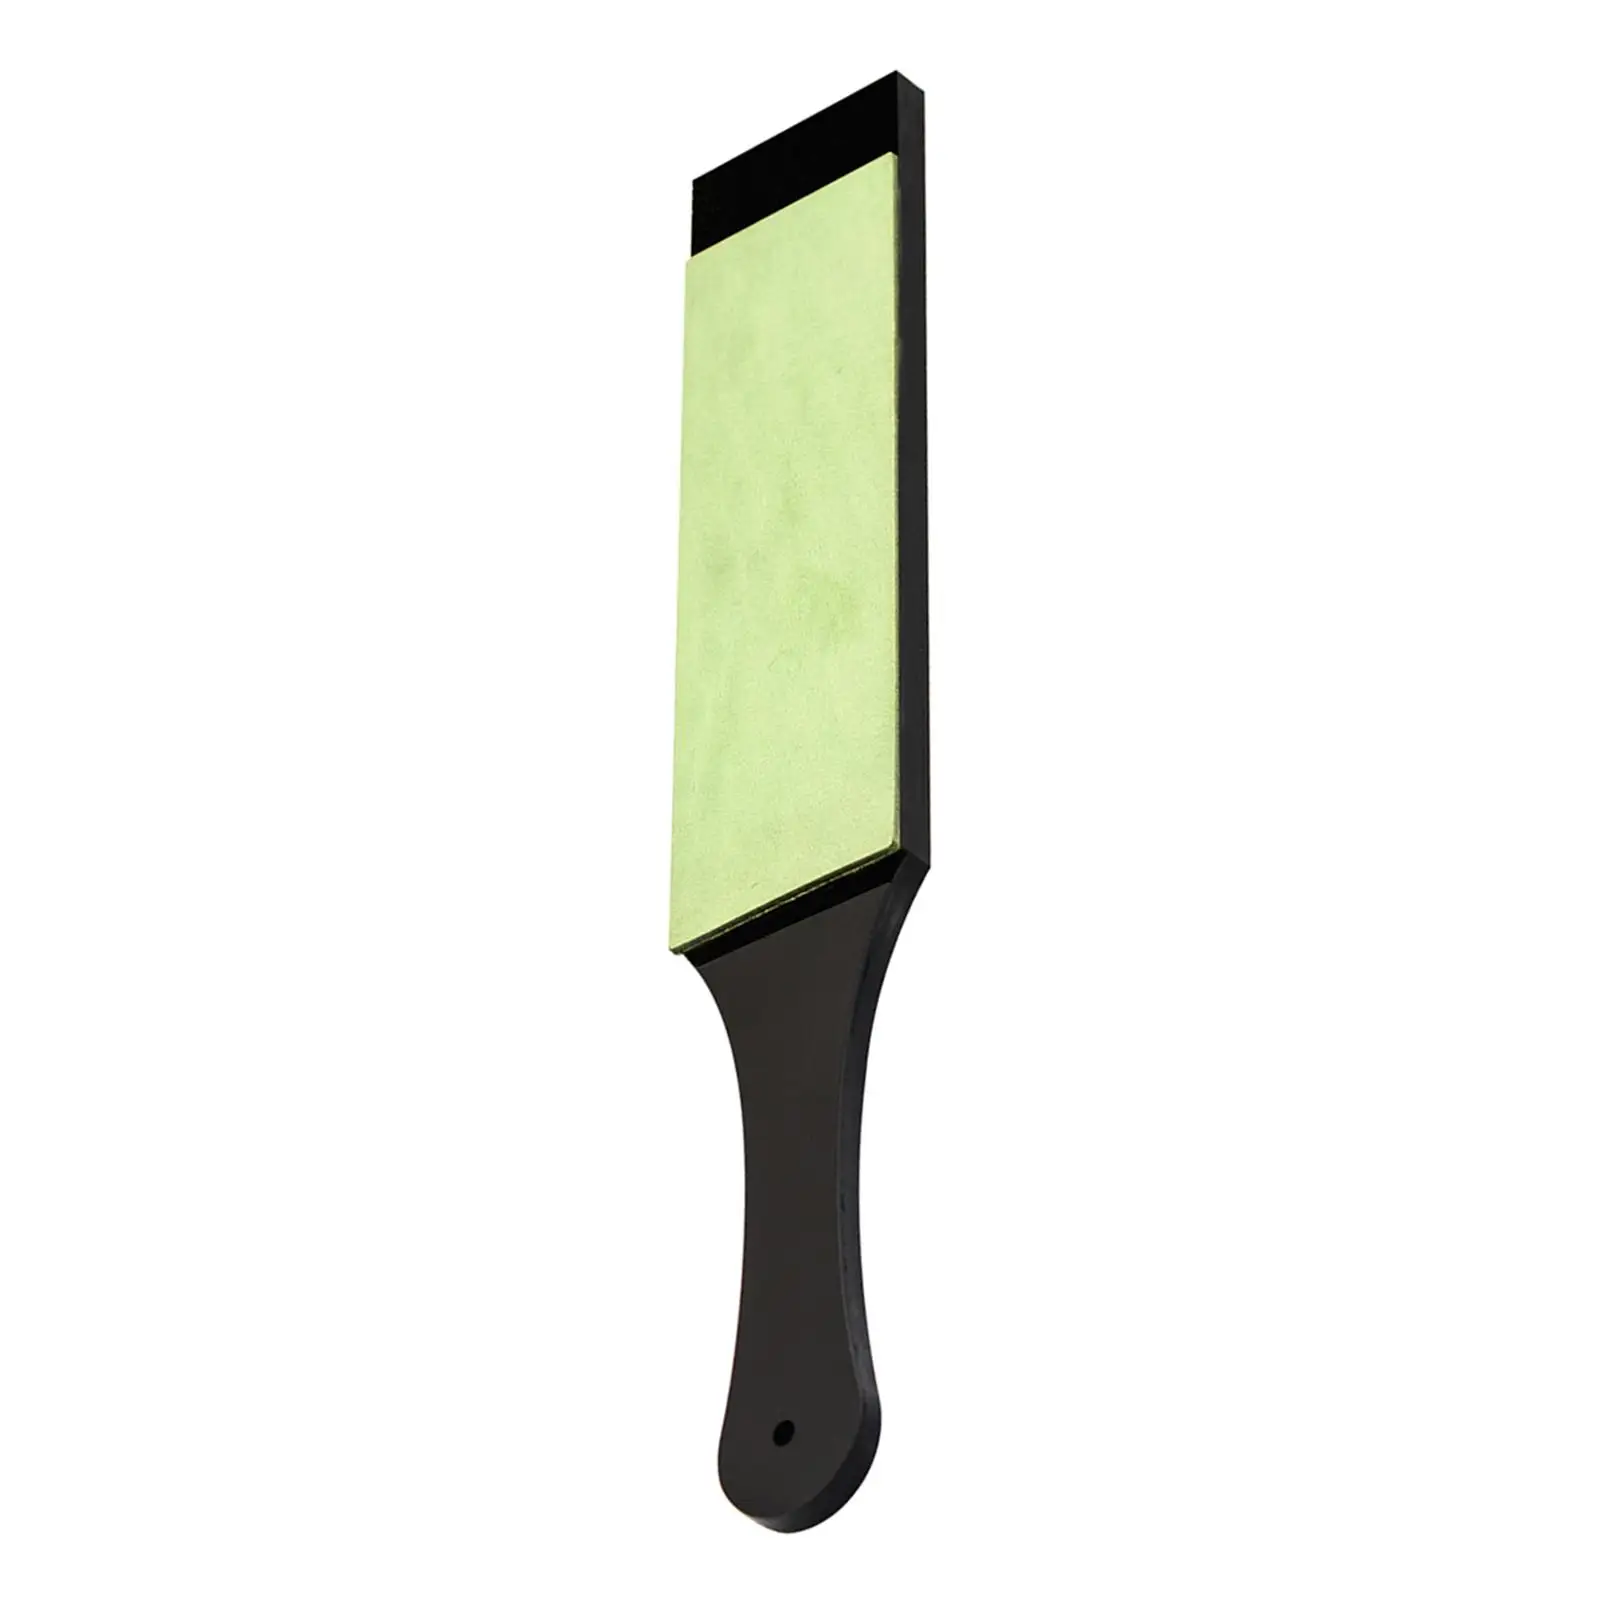 PU Leather Strop Knife Strop Ergonomic Handle Polishing Board Knife for Knife Sharpening Wood Carving Woodworking